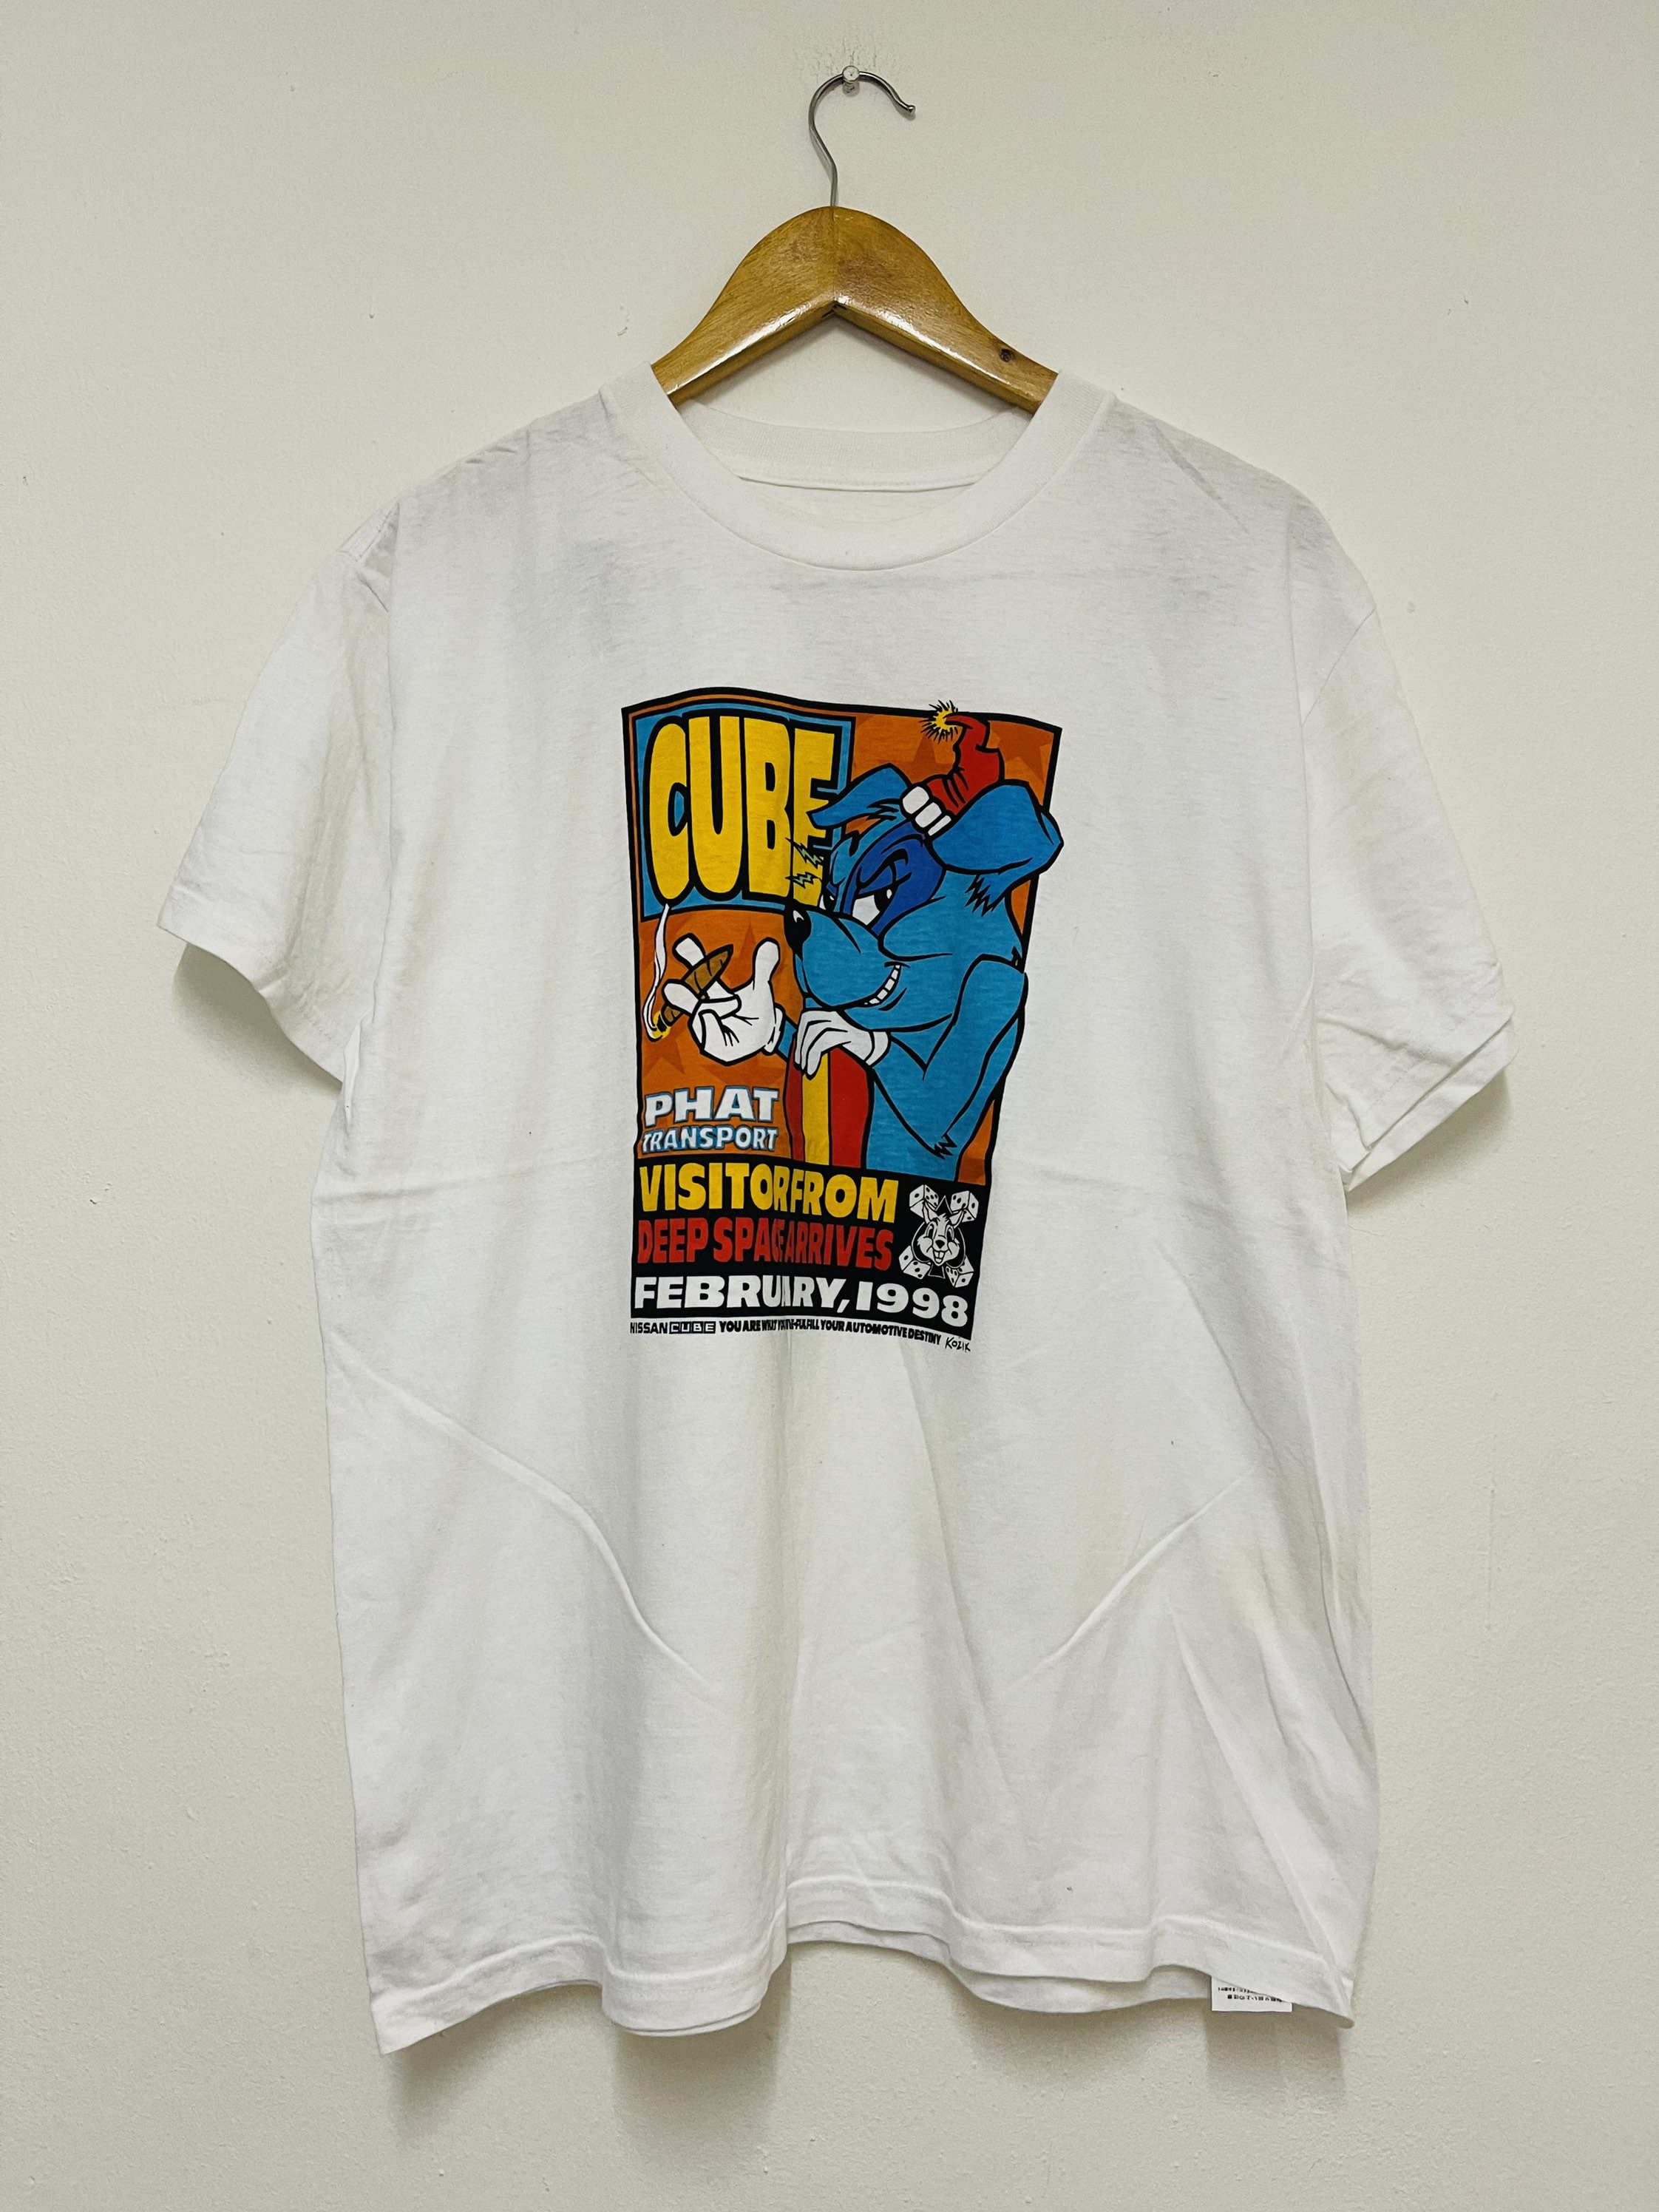 Vintage 90s Cube 1998 by Frank Kozik Artwork T-shirt / Streetwear 